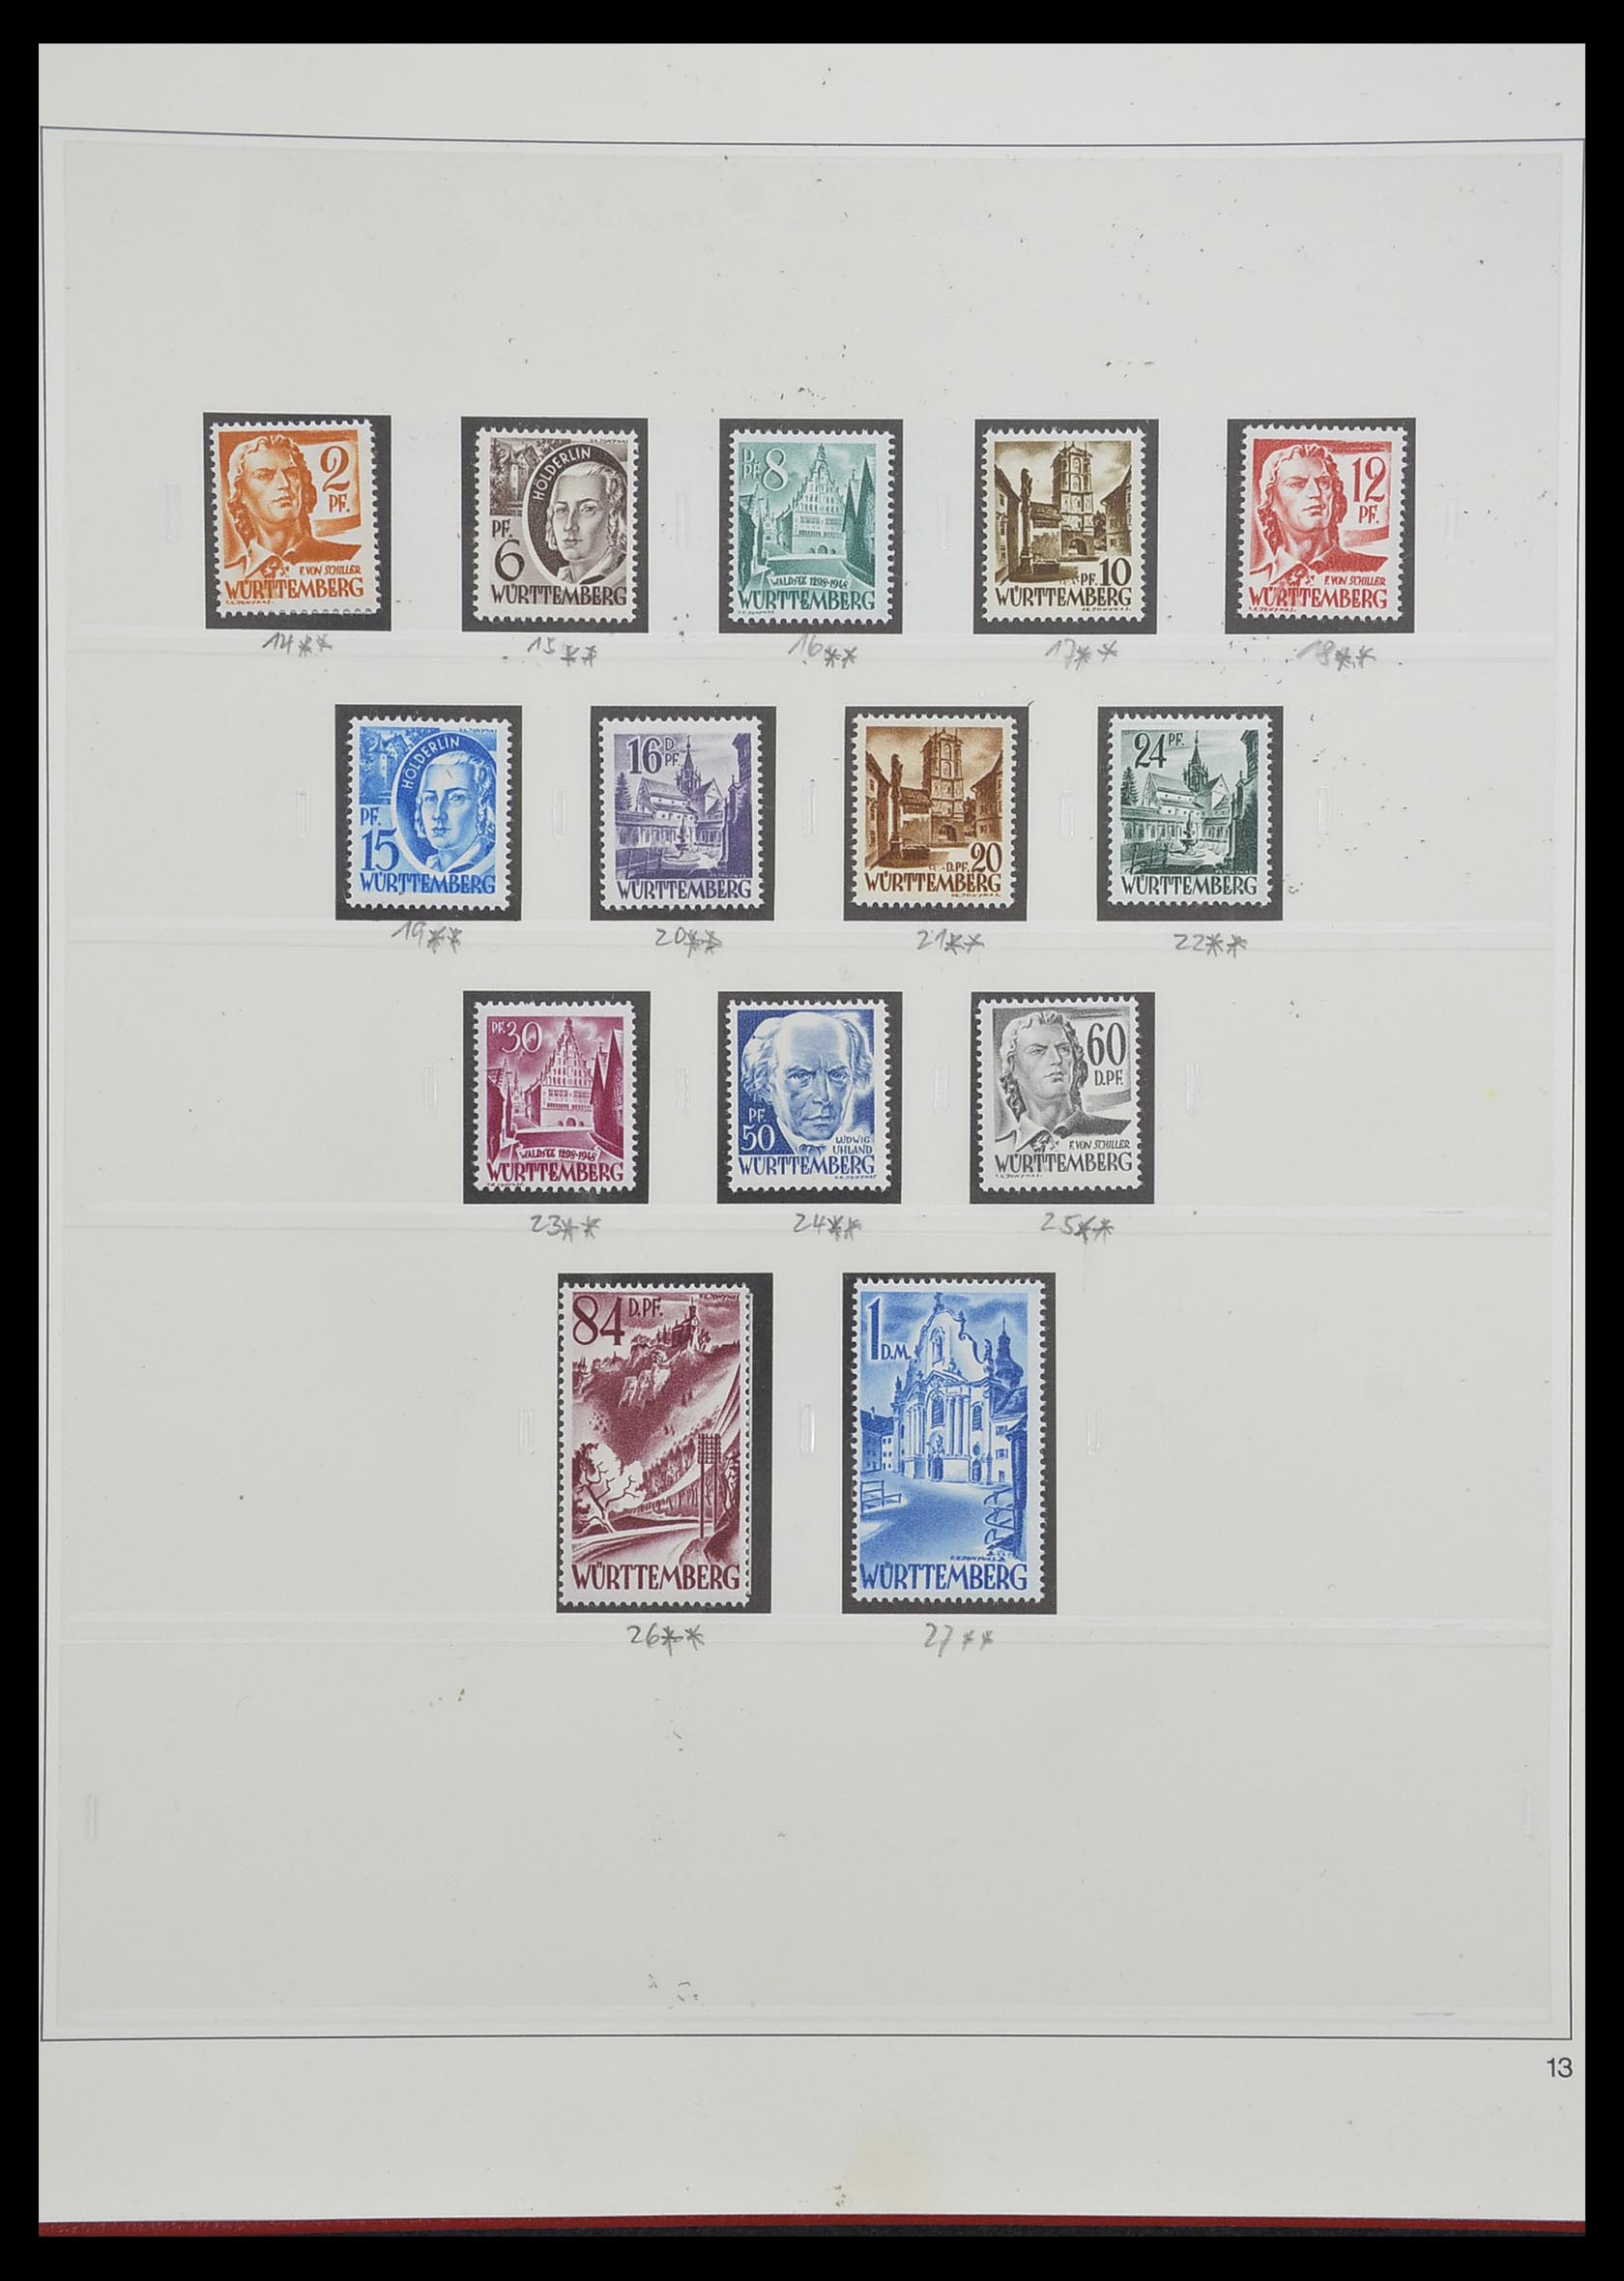 33208 029 - Stamp collection 33208 German Zones 1945-1949.